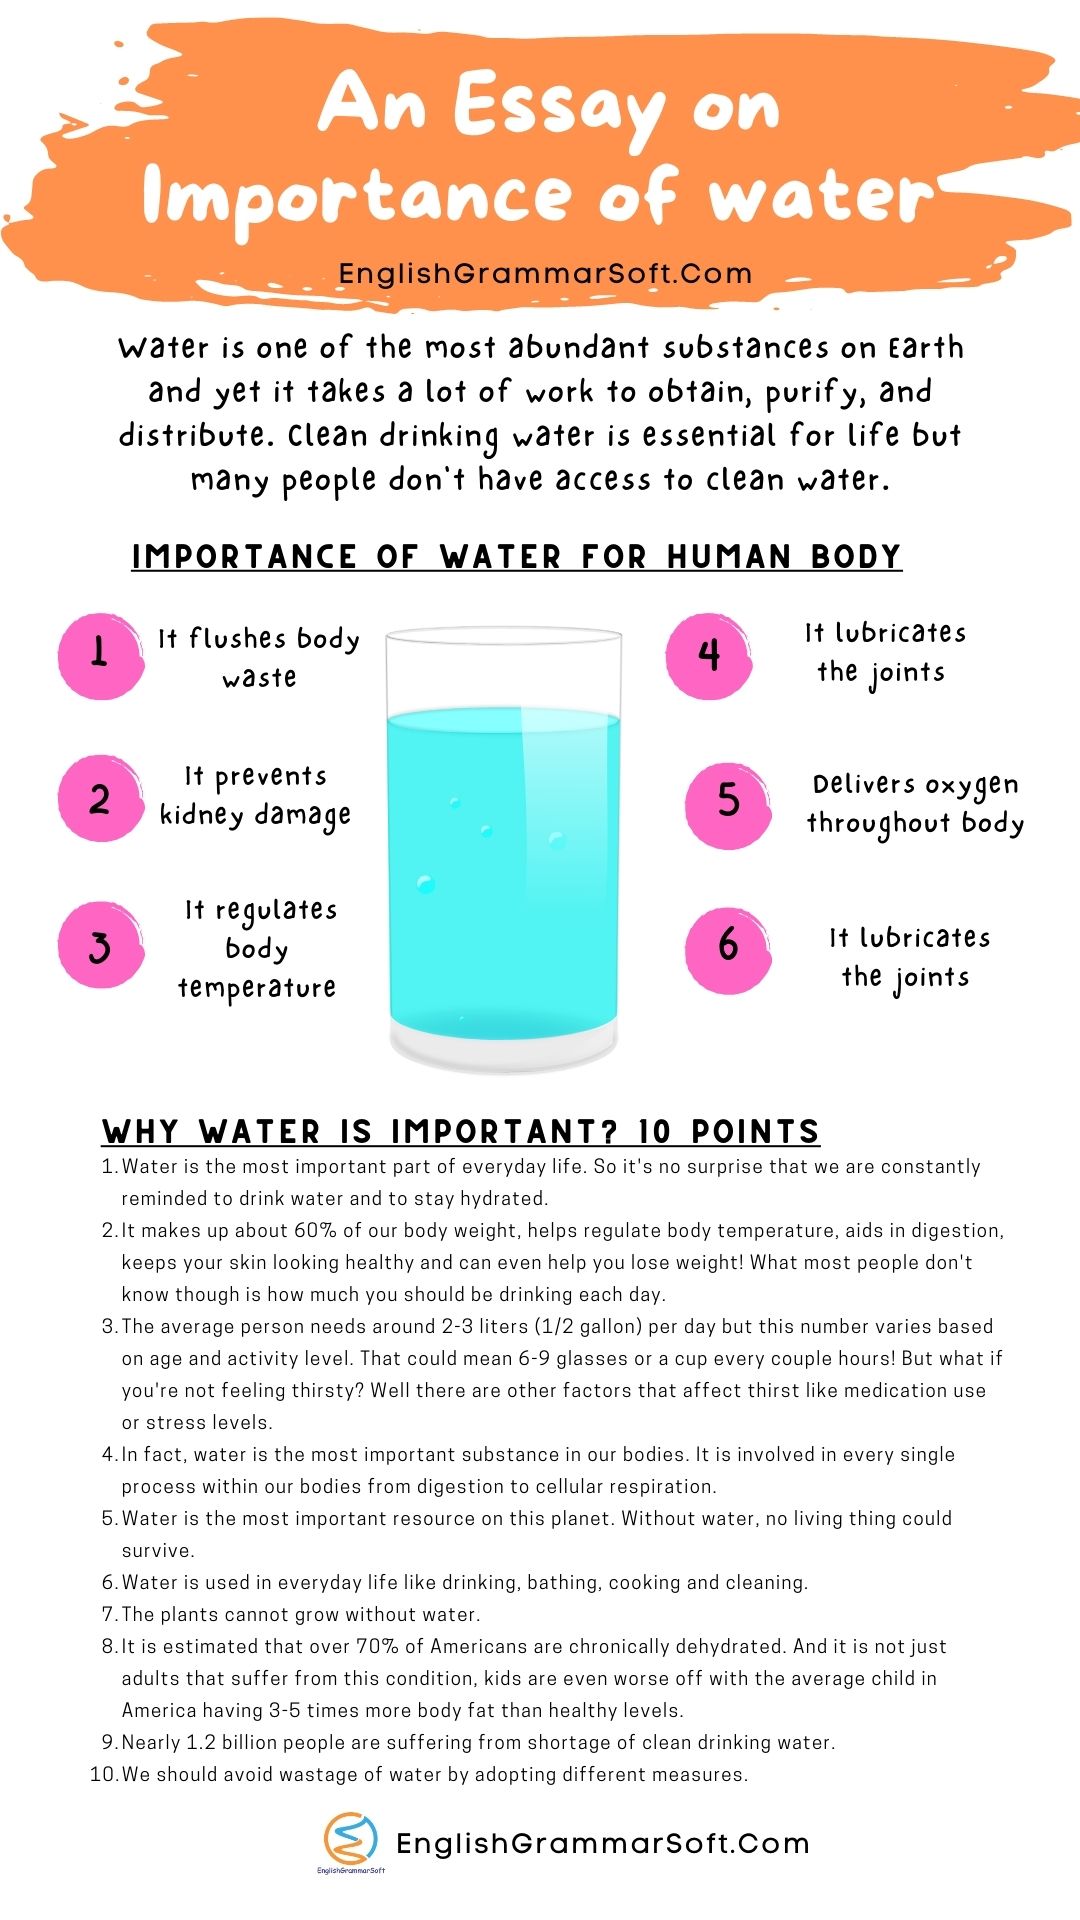 essay on drinking water